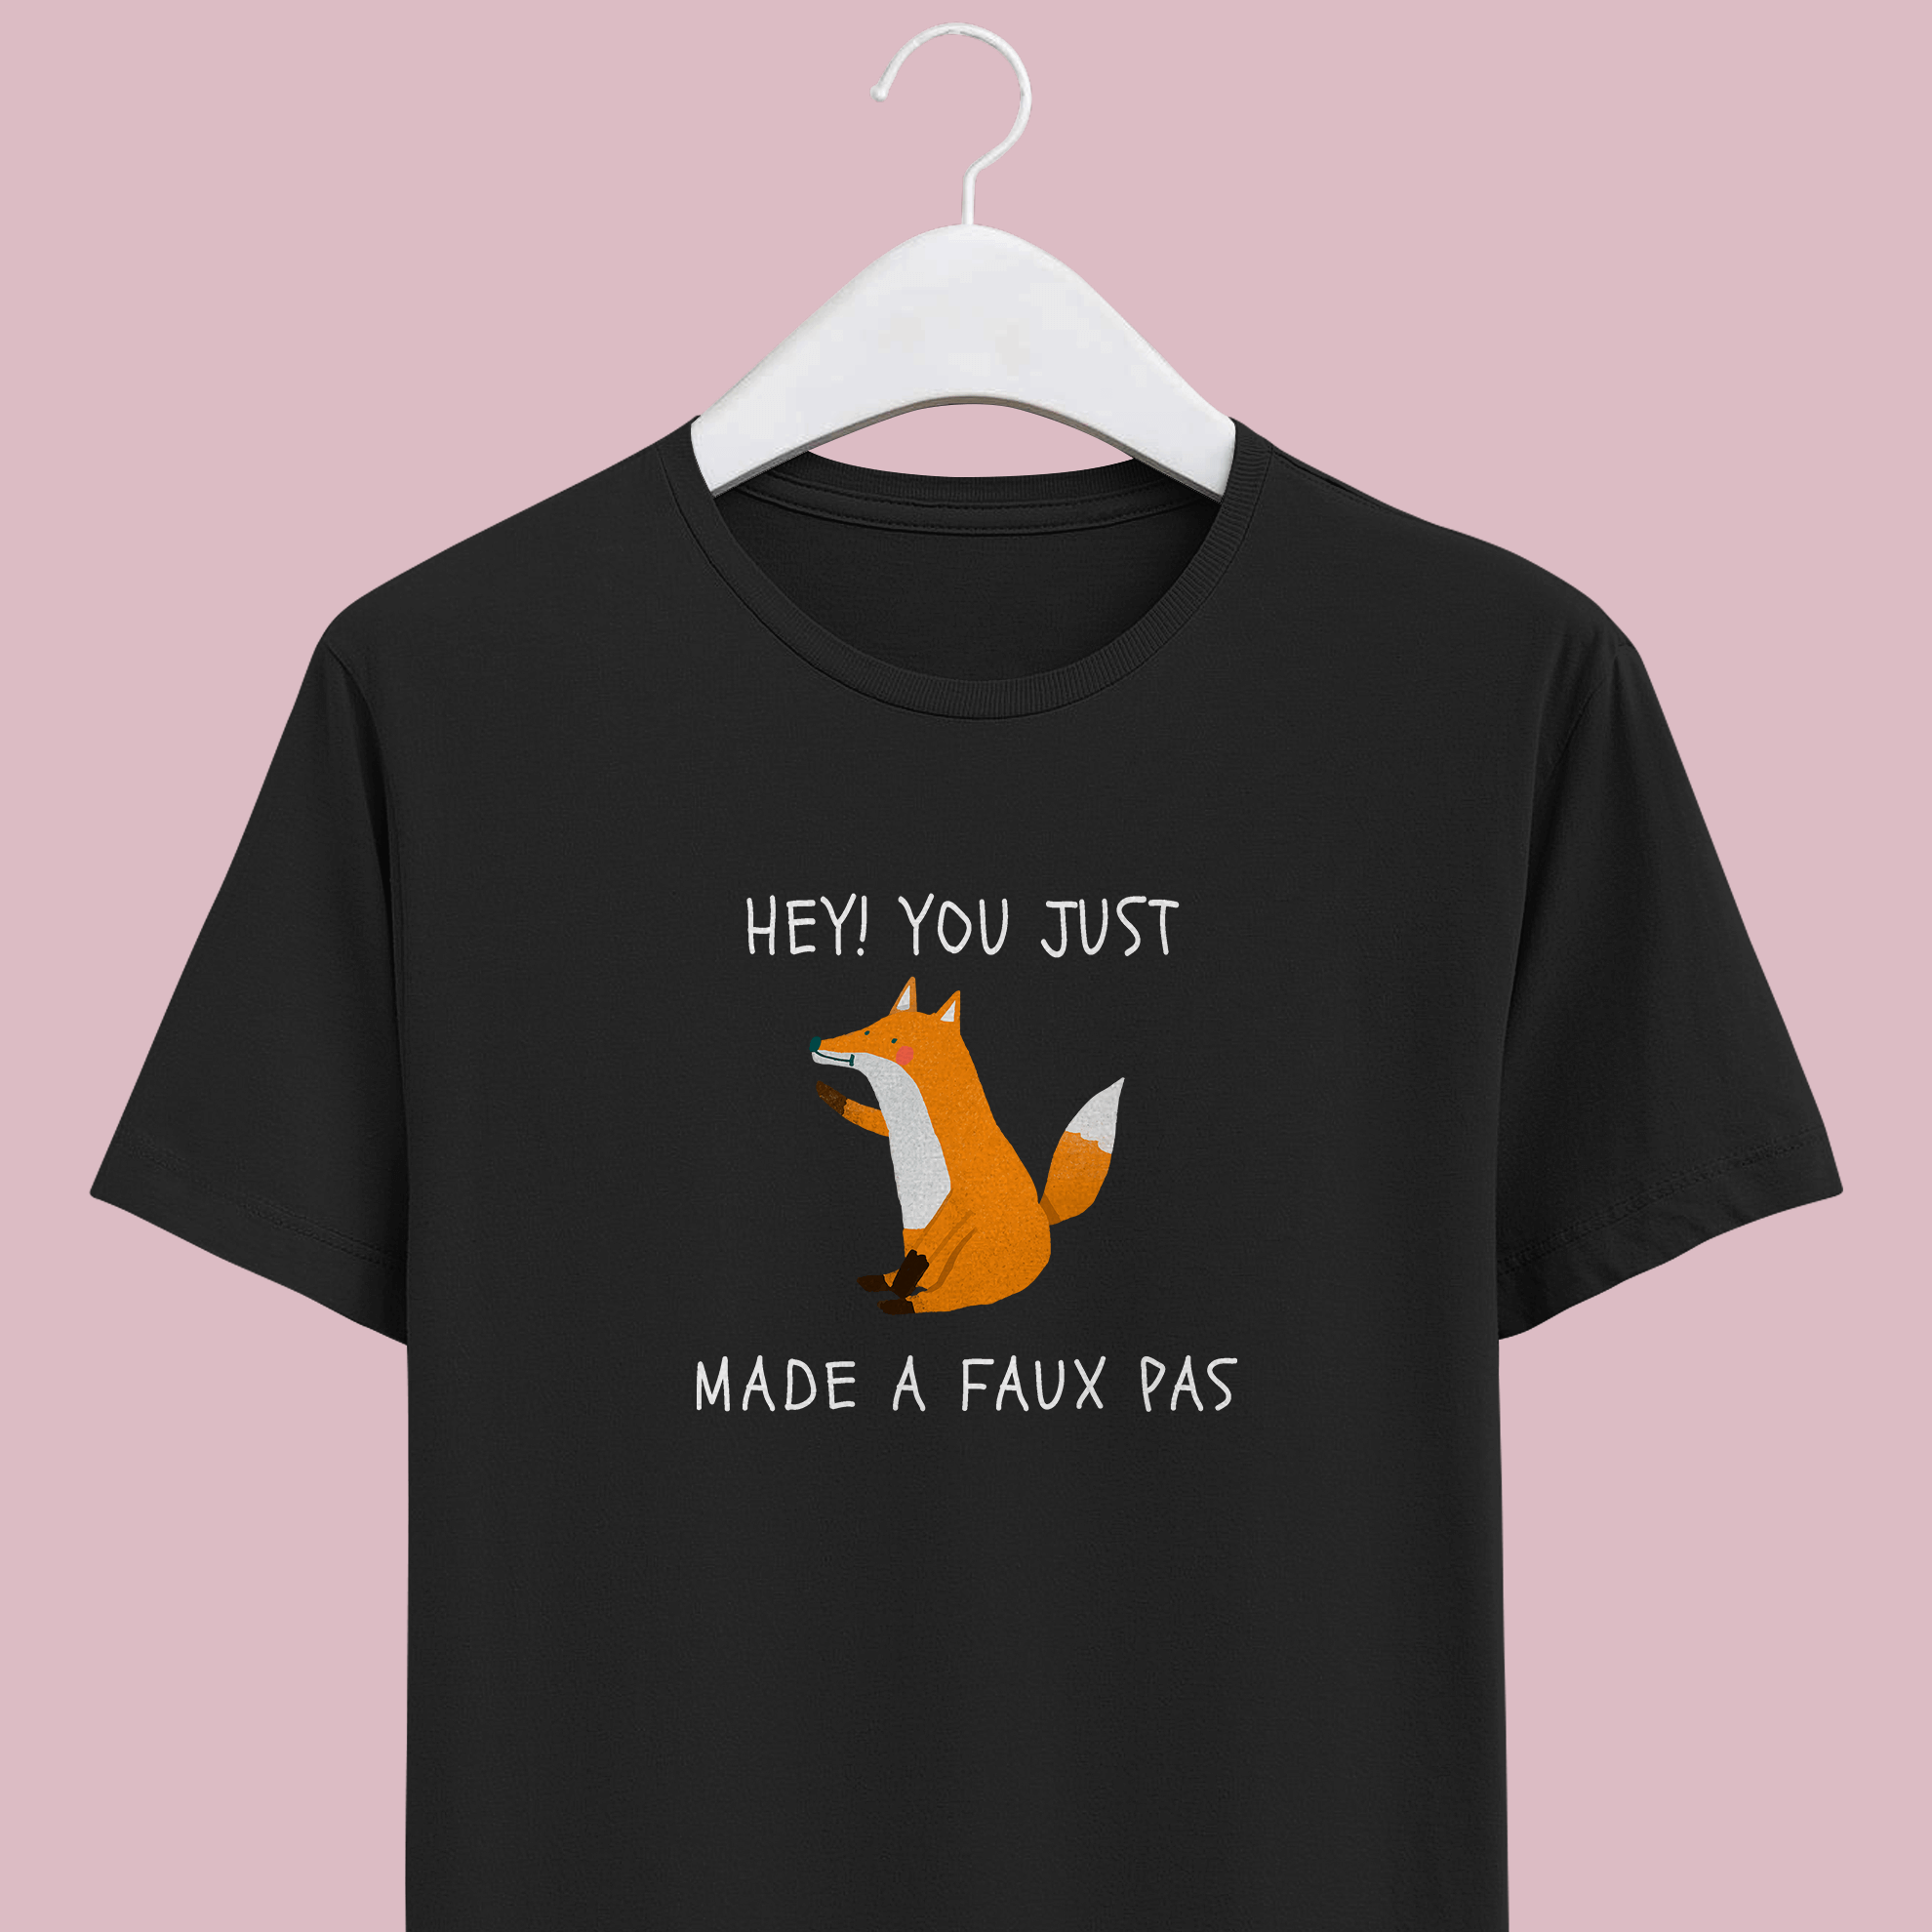 Joke on french word faux pas with orange sitting fox on black cotton unisex t-shirt.